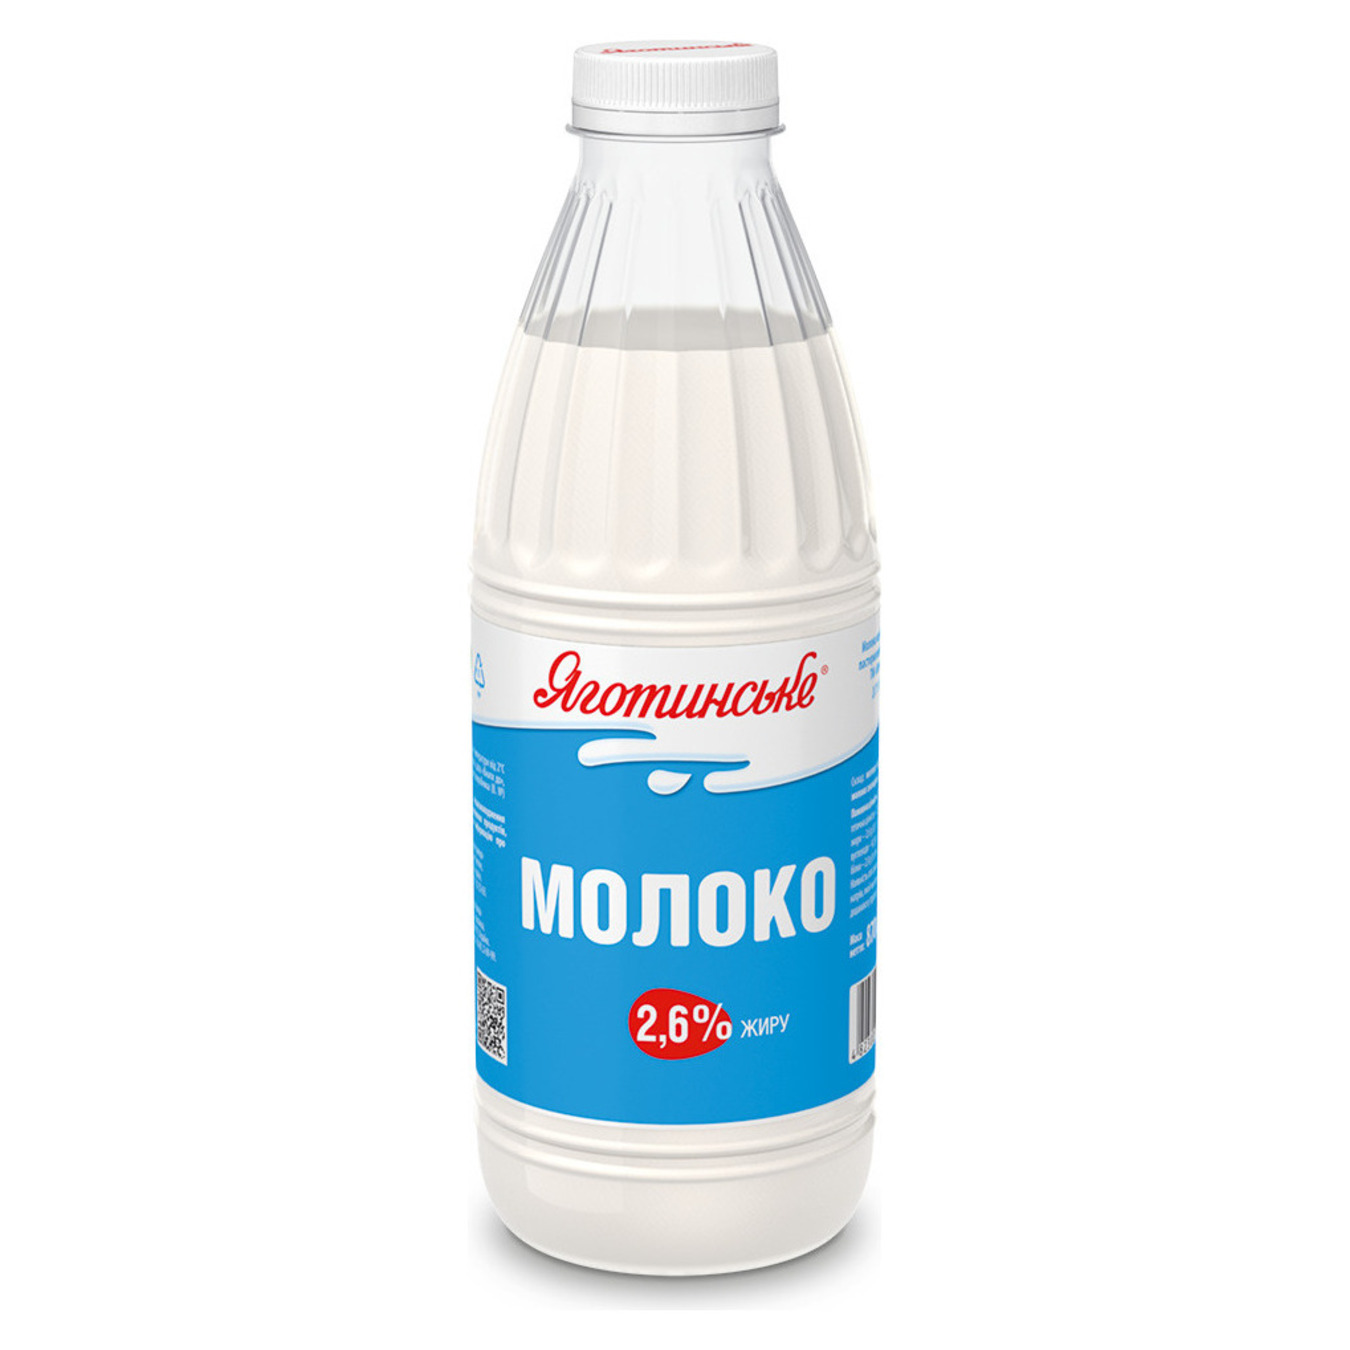 Yahotynske Pasteurized Milk 2,6% 870g